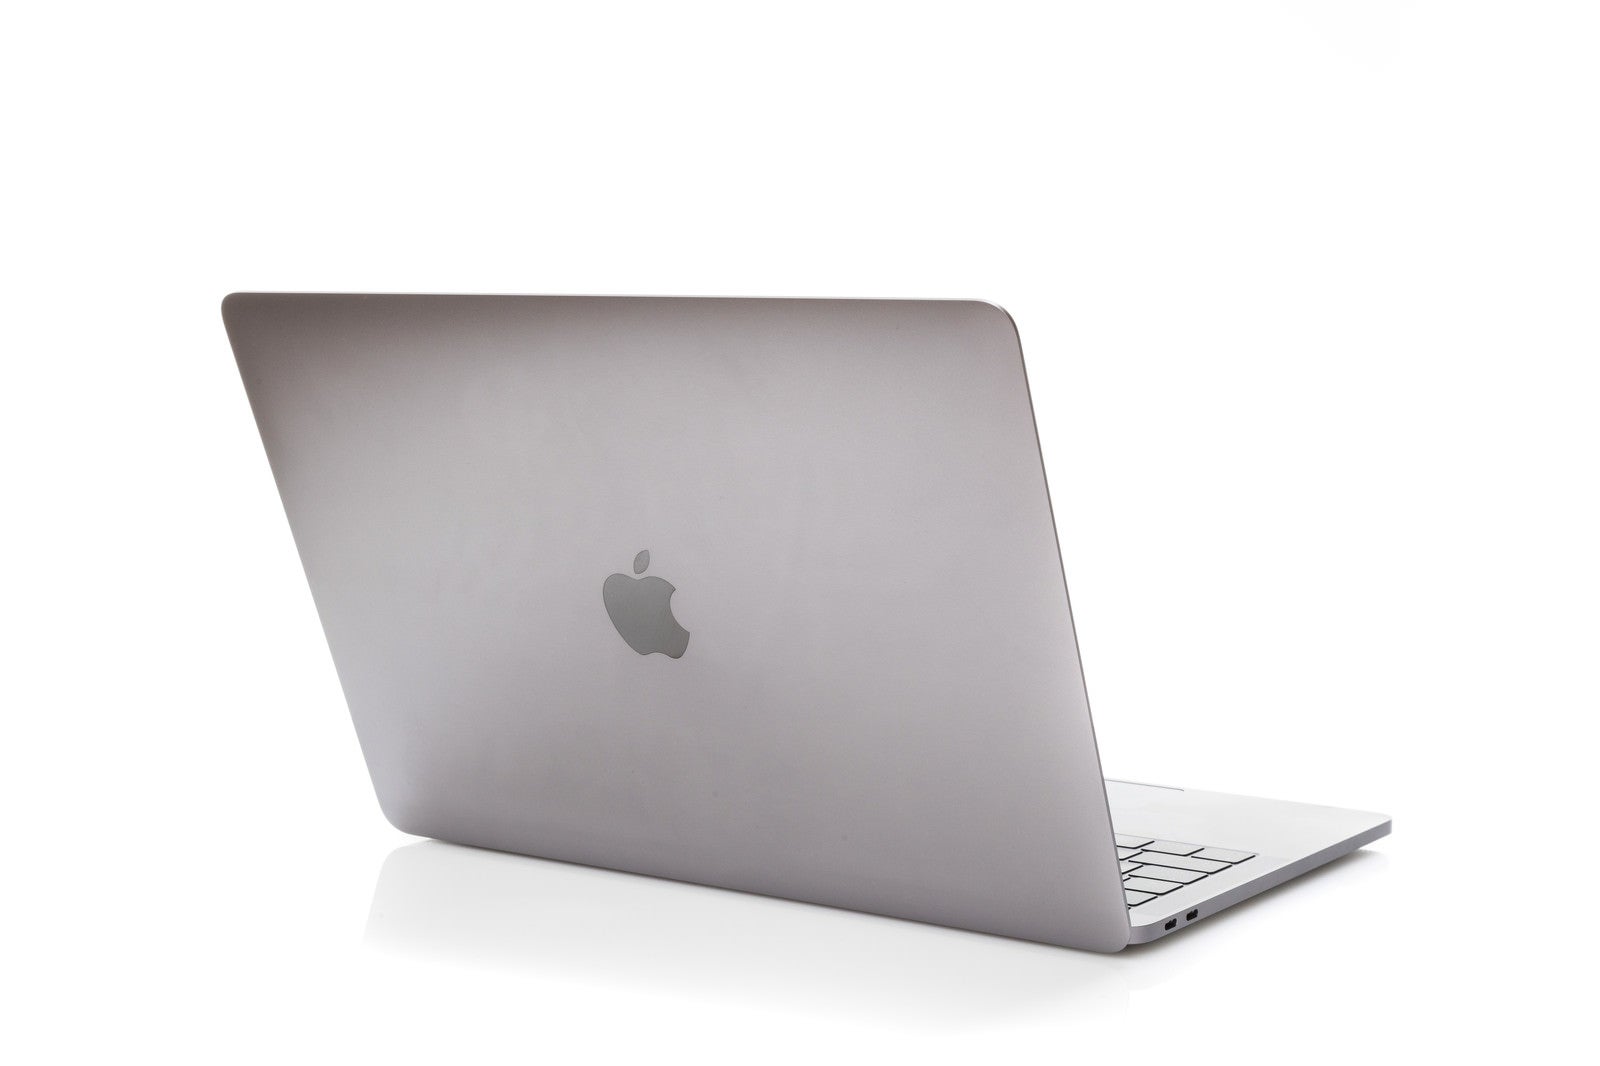 「MacBook Pro13インチ」の写真